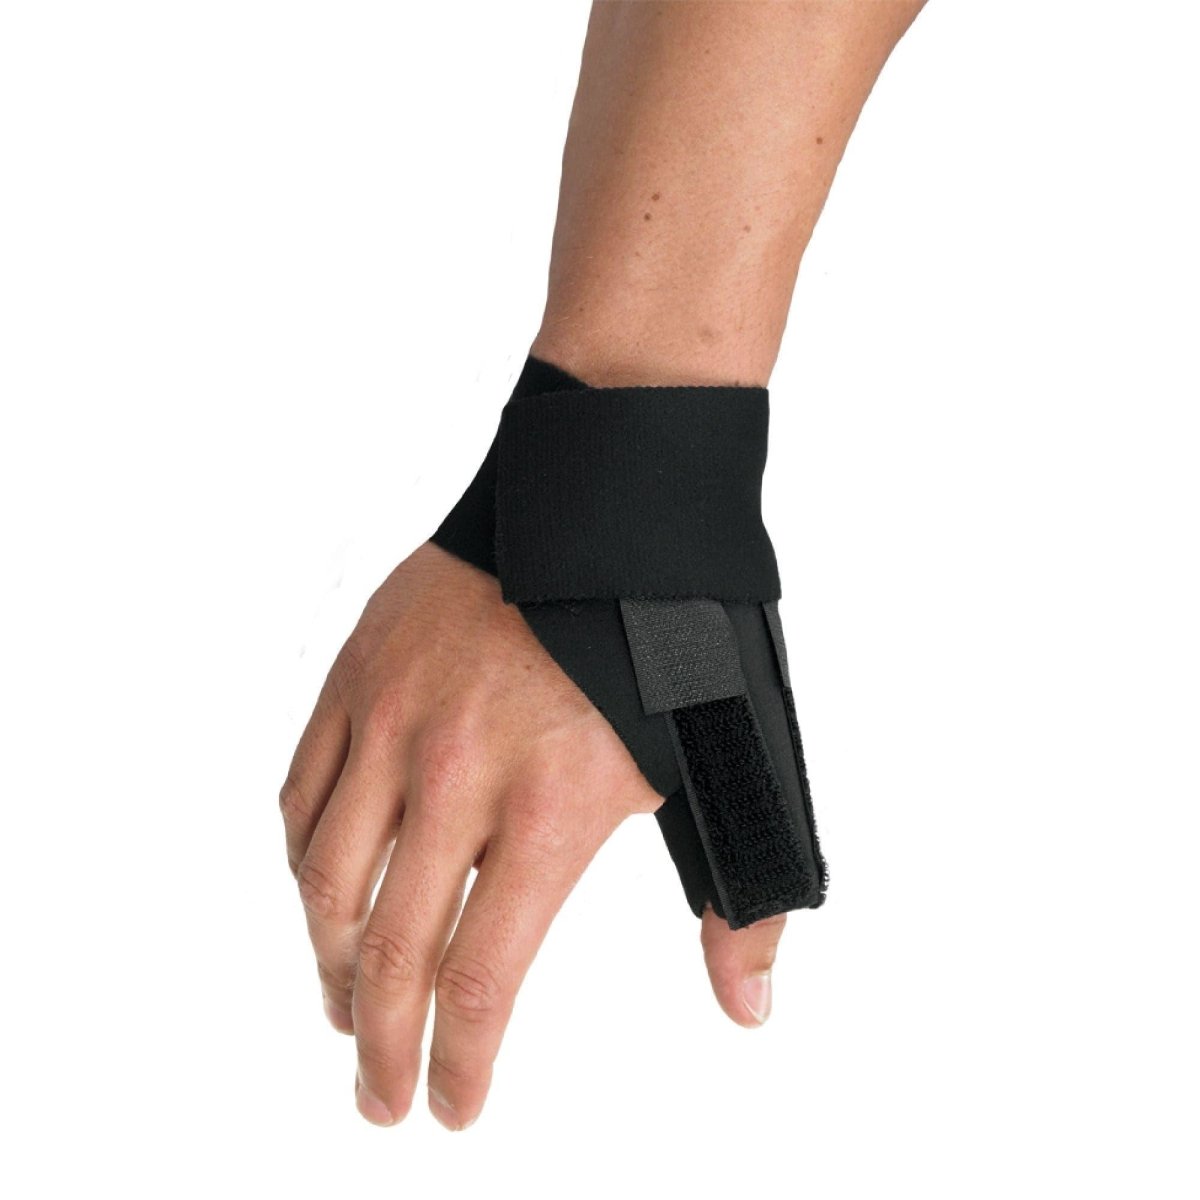 Breg Premier Thumb Splint with Stays - 10201 - Brace Direct